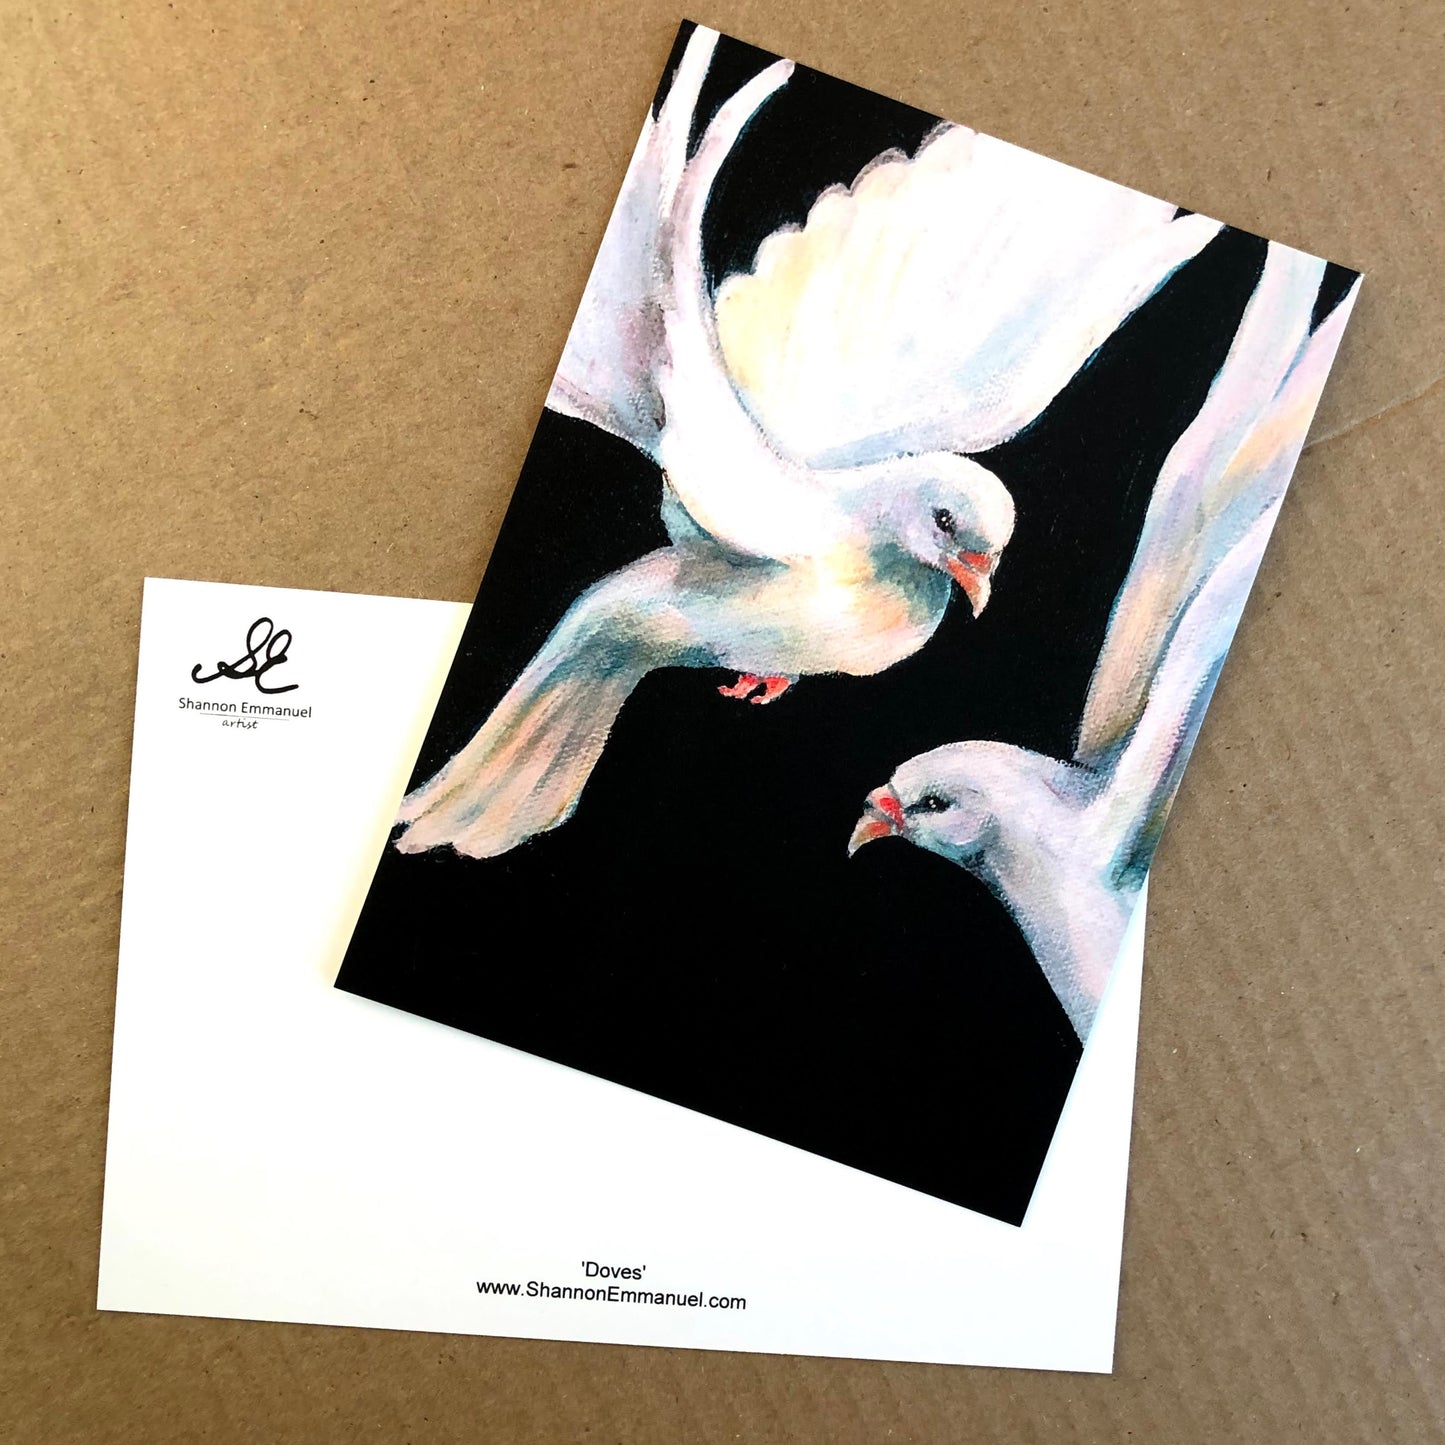 'The Birds' Collectible Art Cards